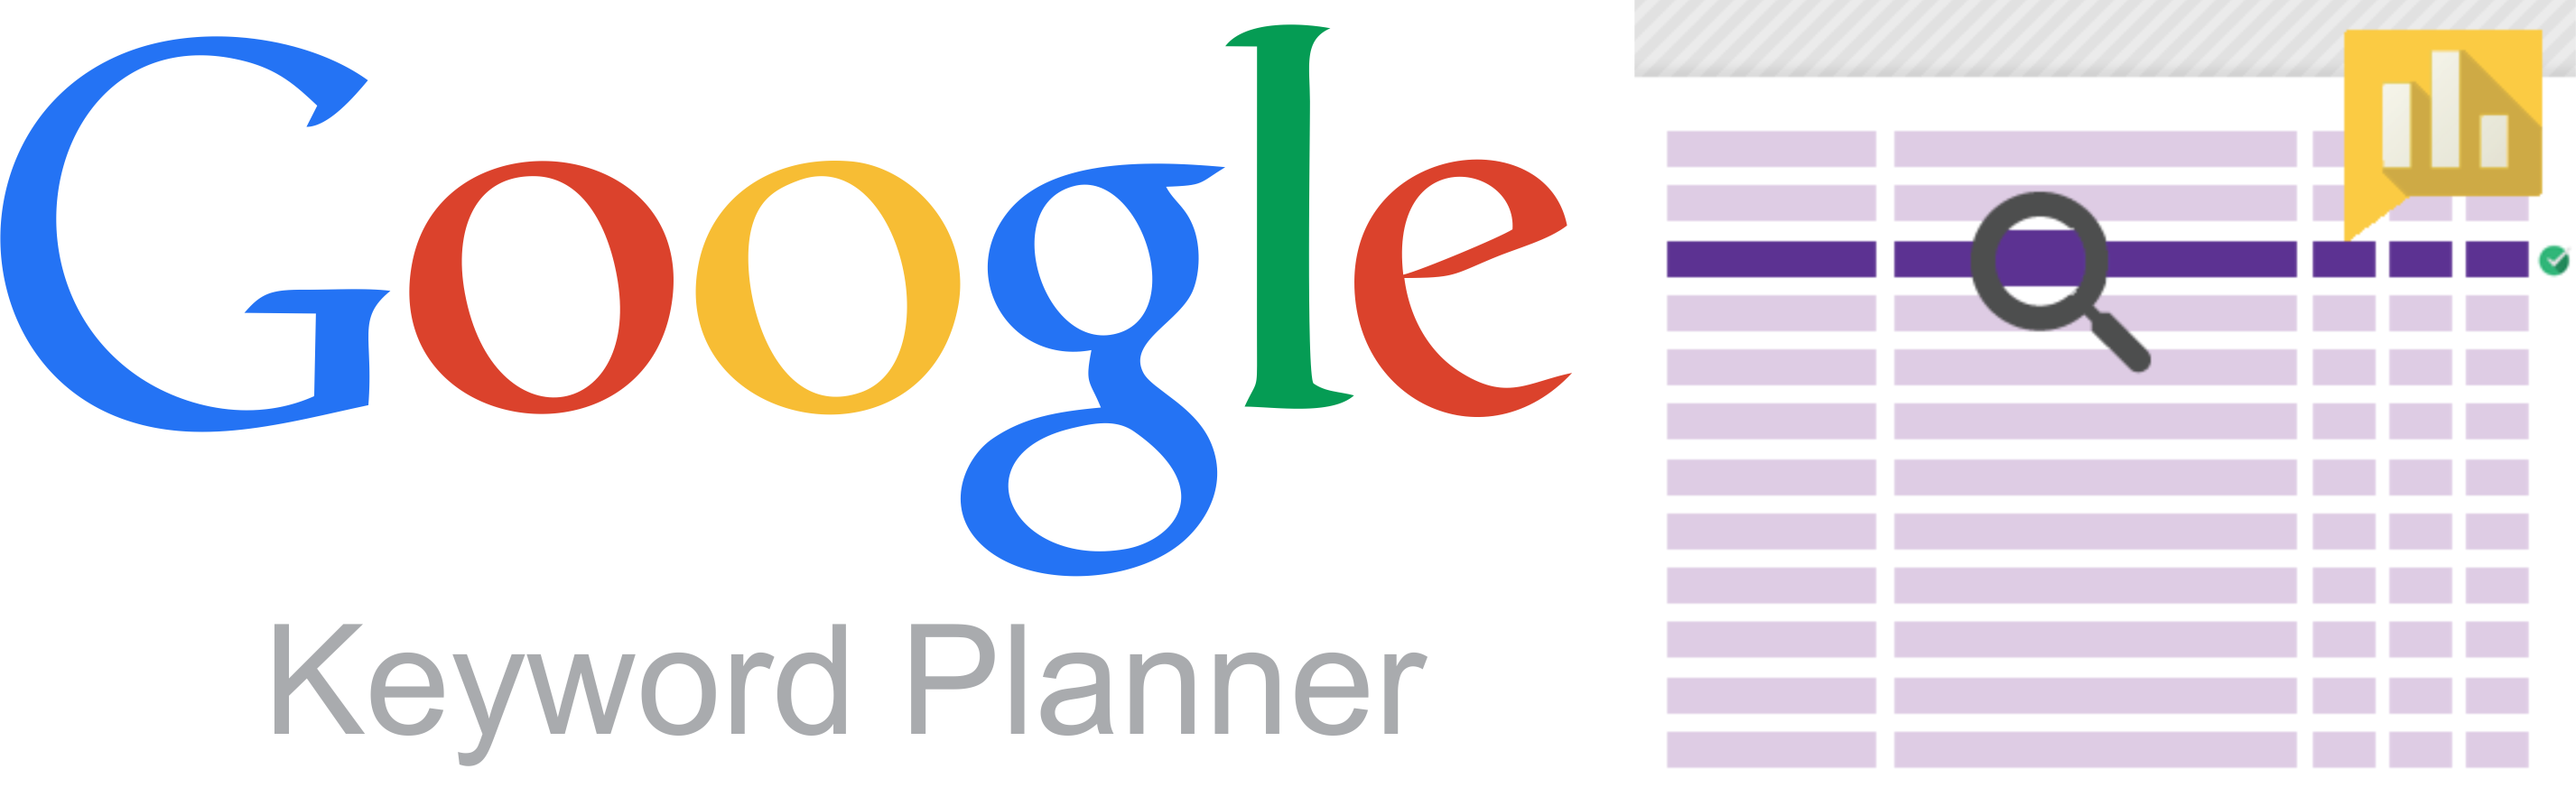 Keyword-planner4 - Google Keyword Planner Tool (2853x883)